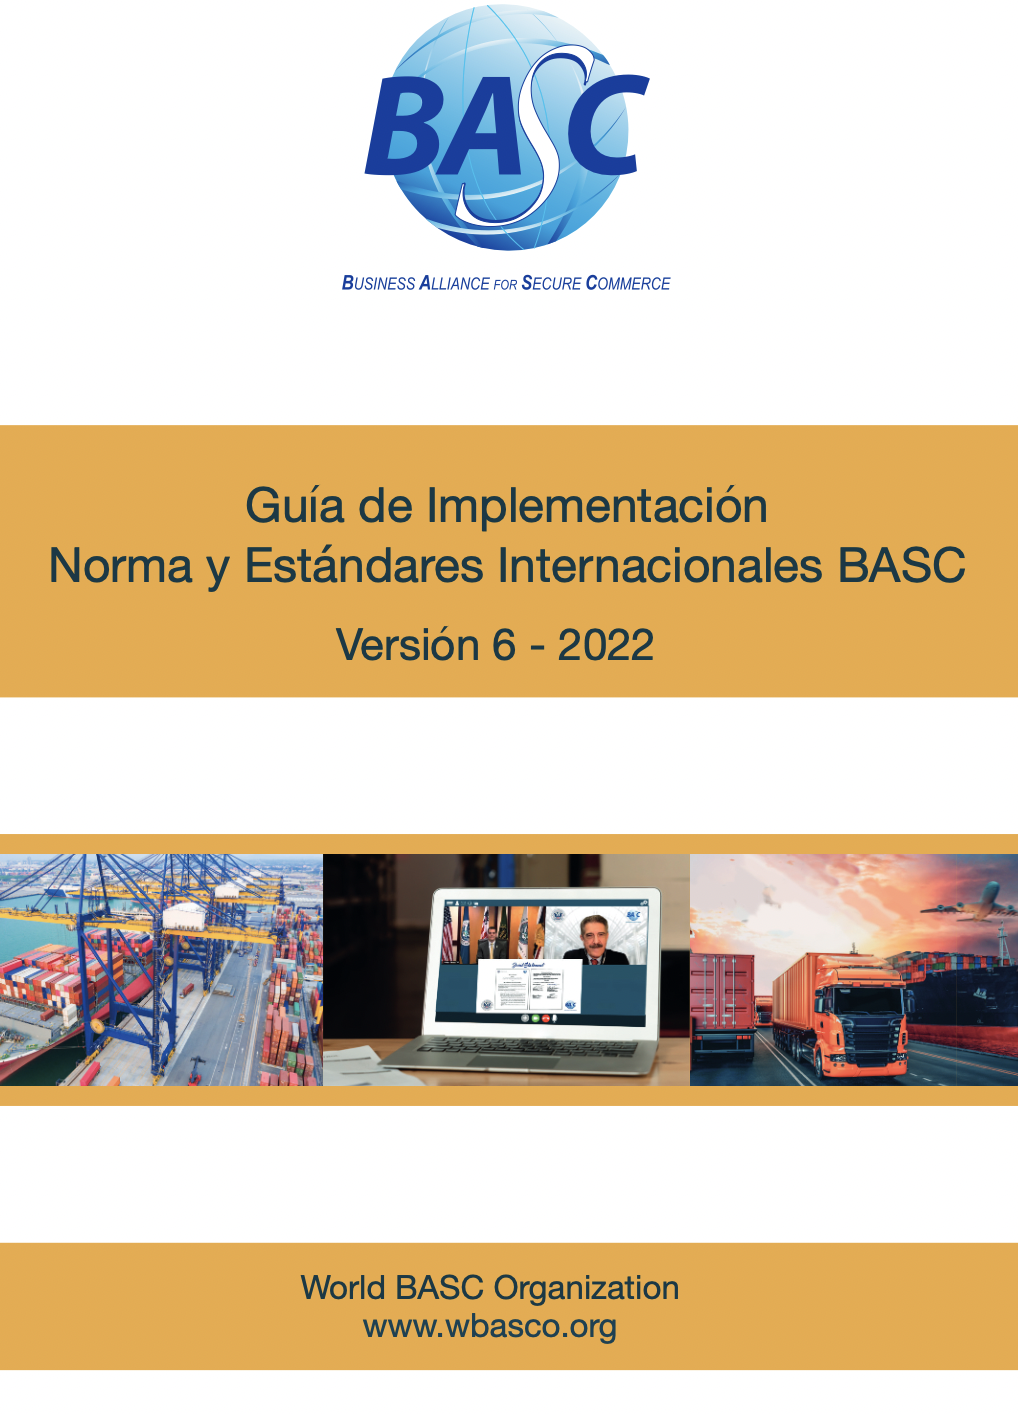 Guia de Implementacion Norma y Estandares BASC V6 2022